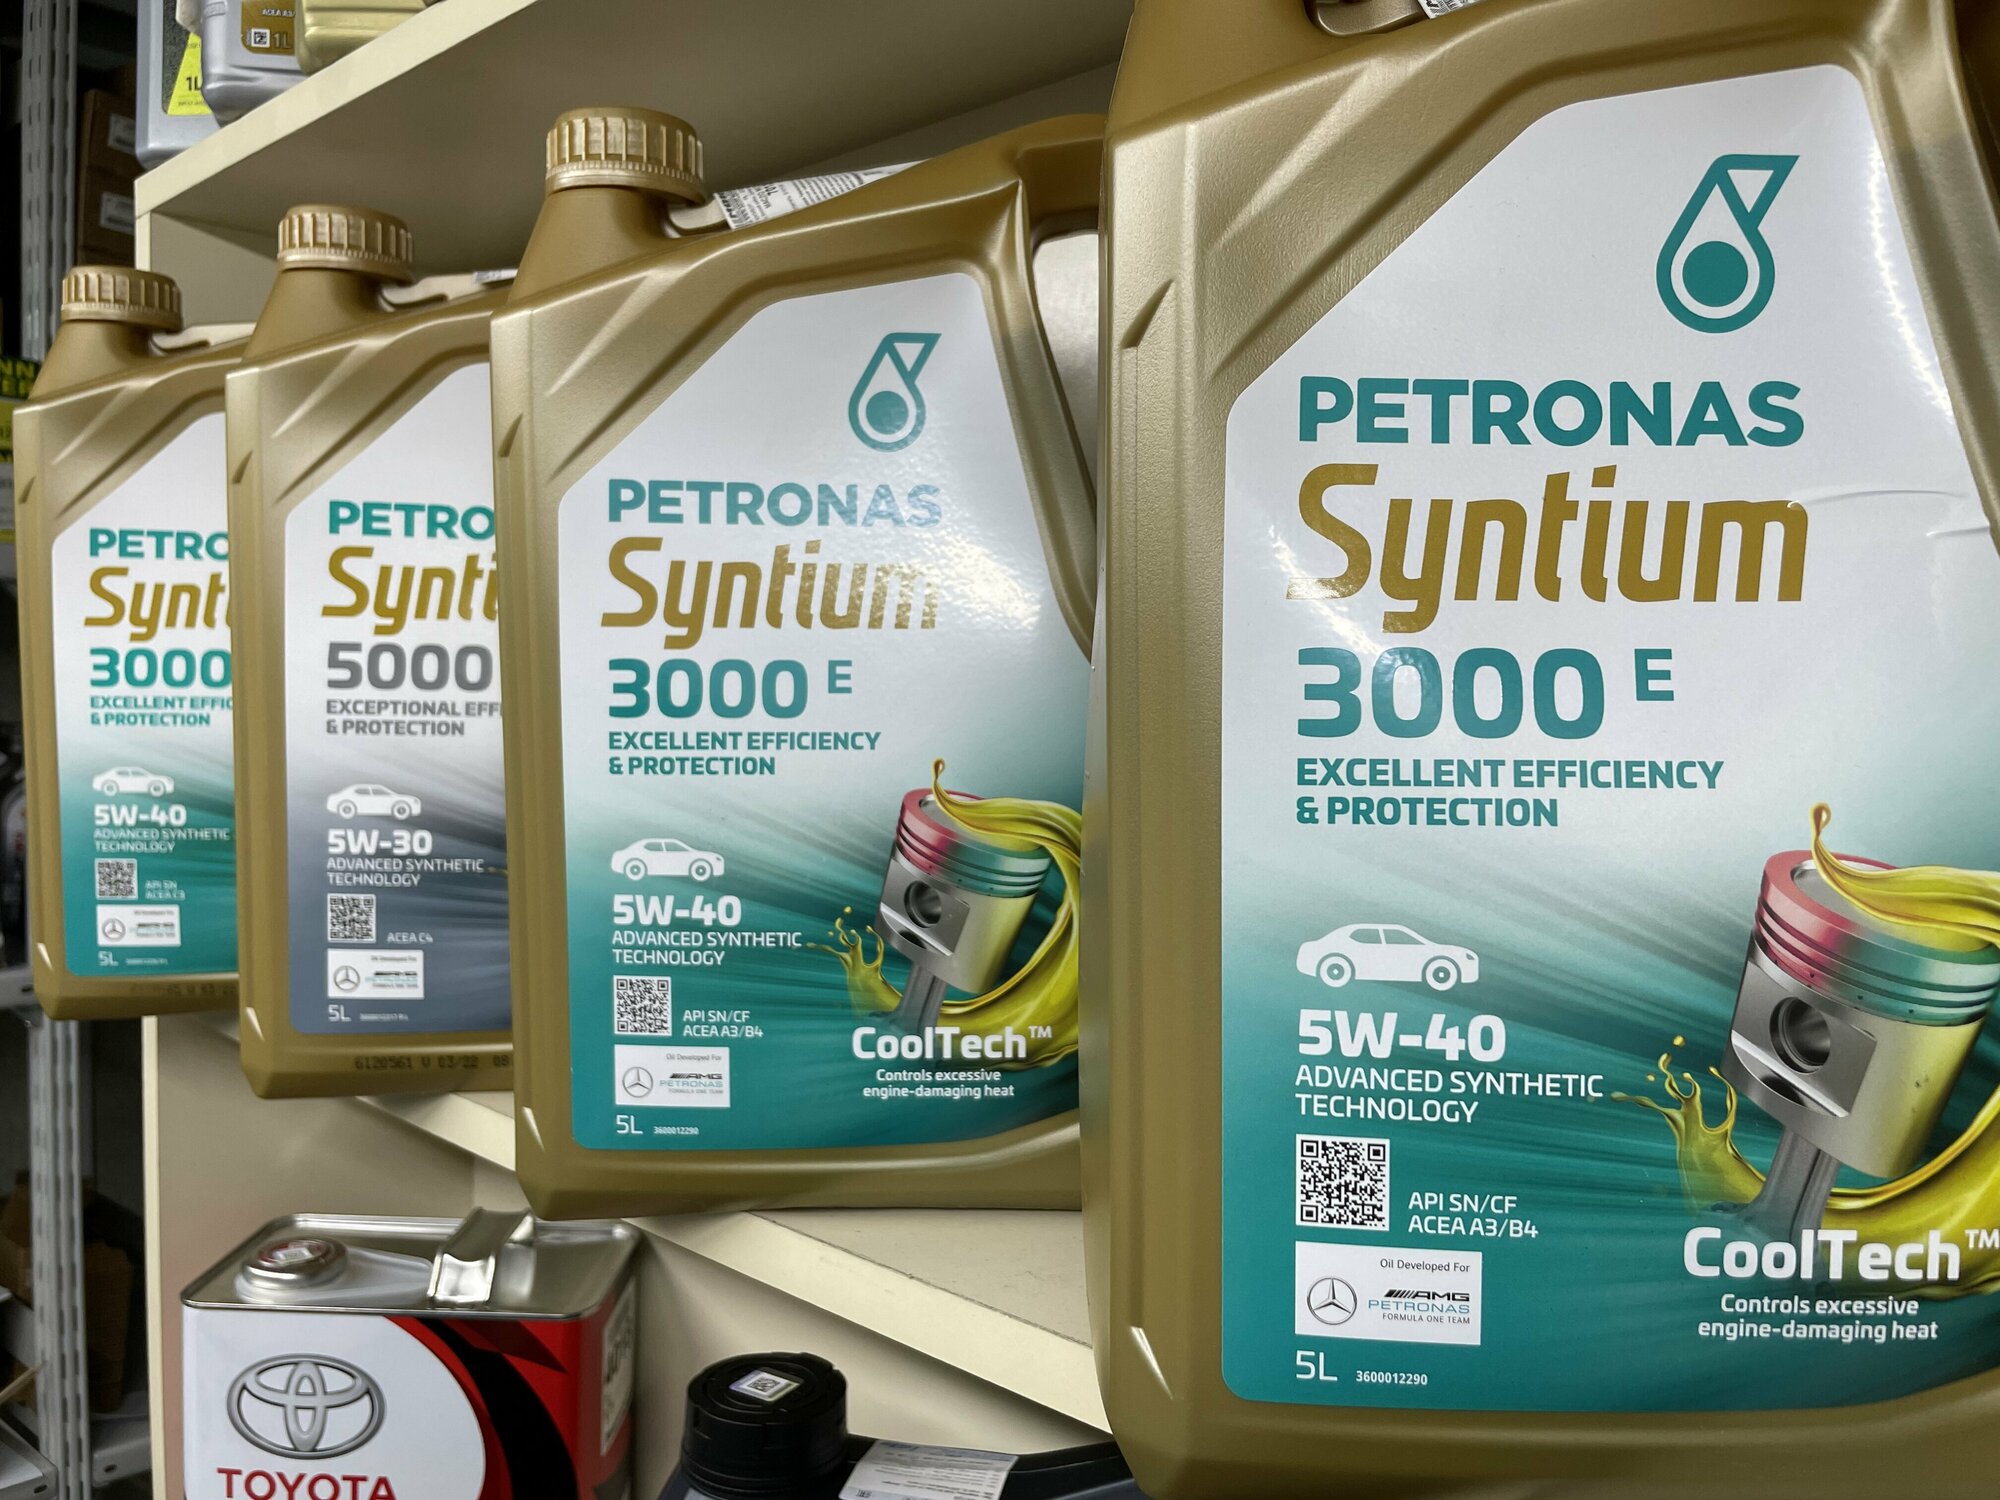 Моторное масло Petronas Syntium 3000 E 5W40 5л, артикул 18055019